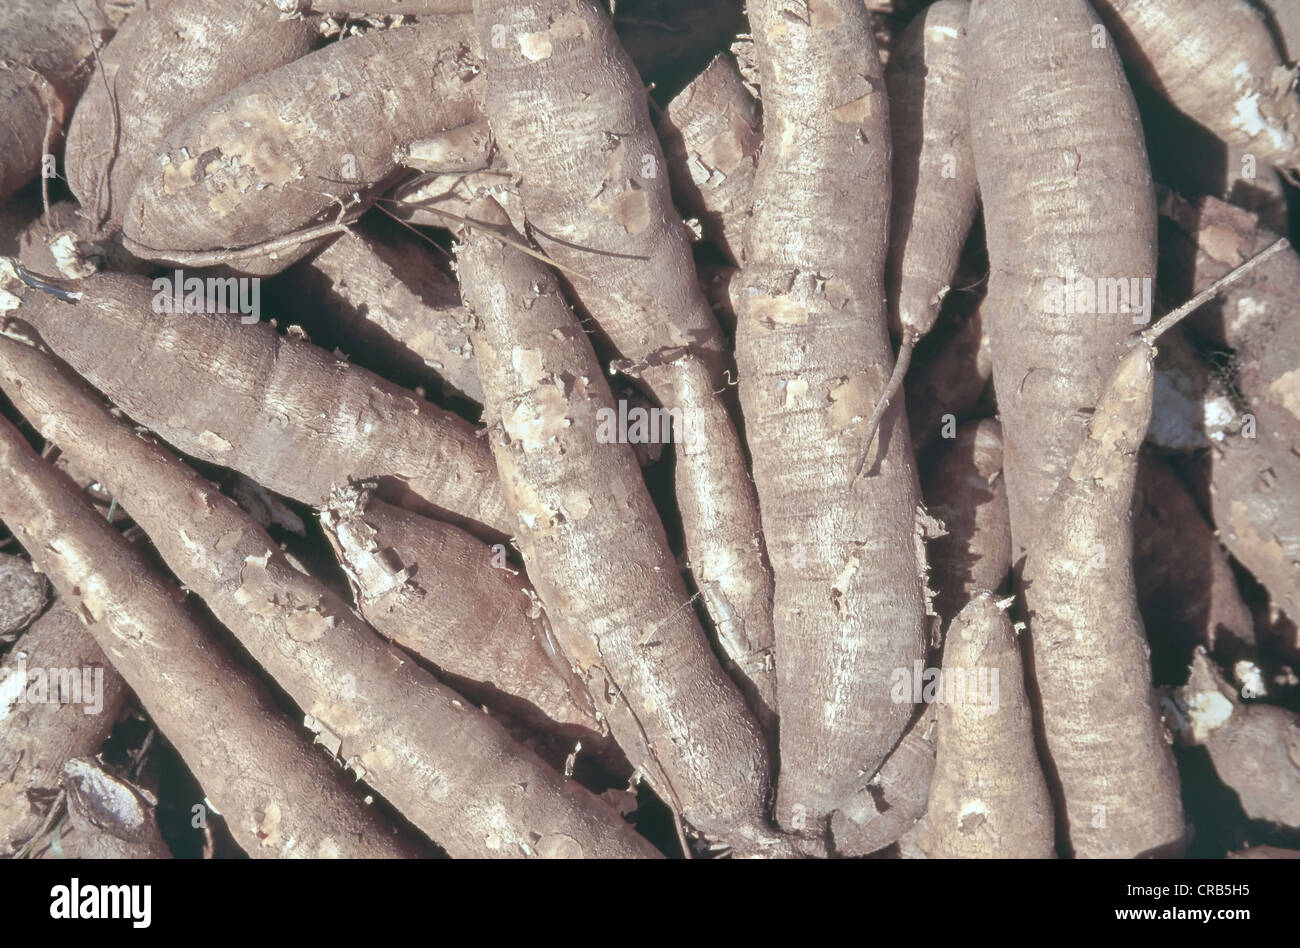 Harvested 'Cassava' roots, Thailand. Stock Photo